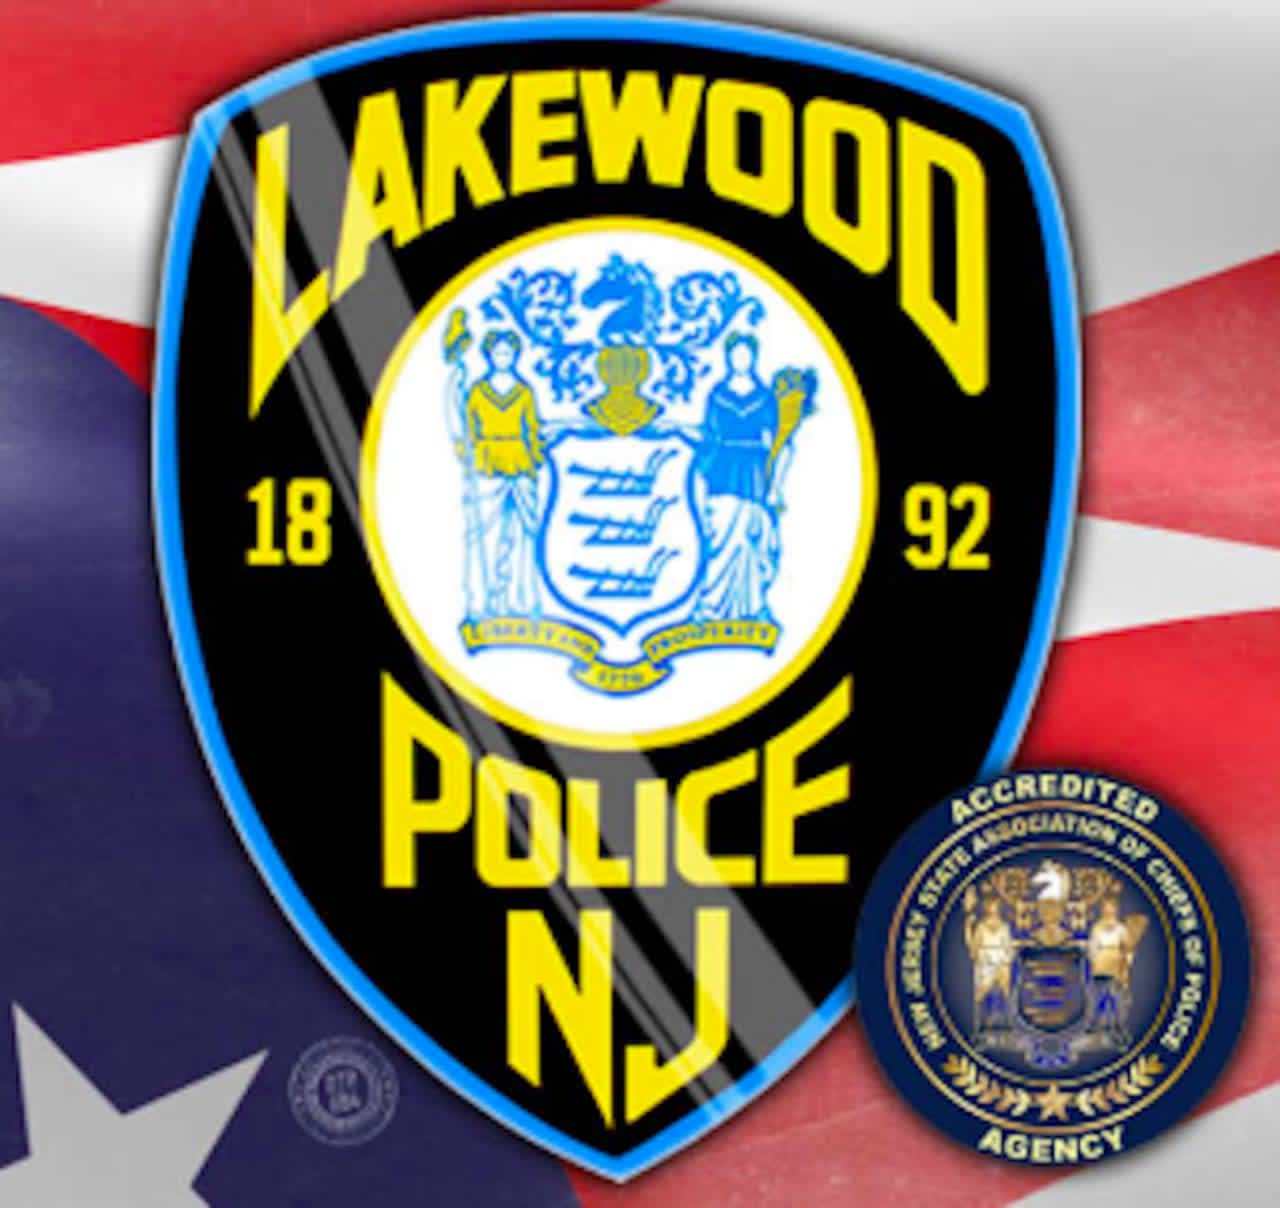 Lakewood police